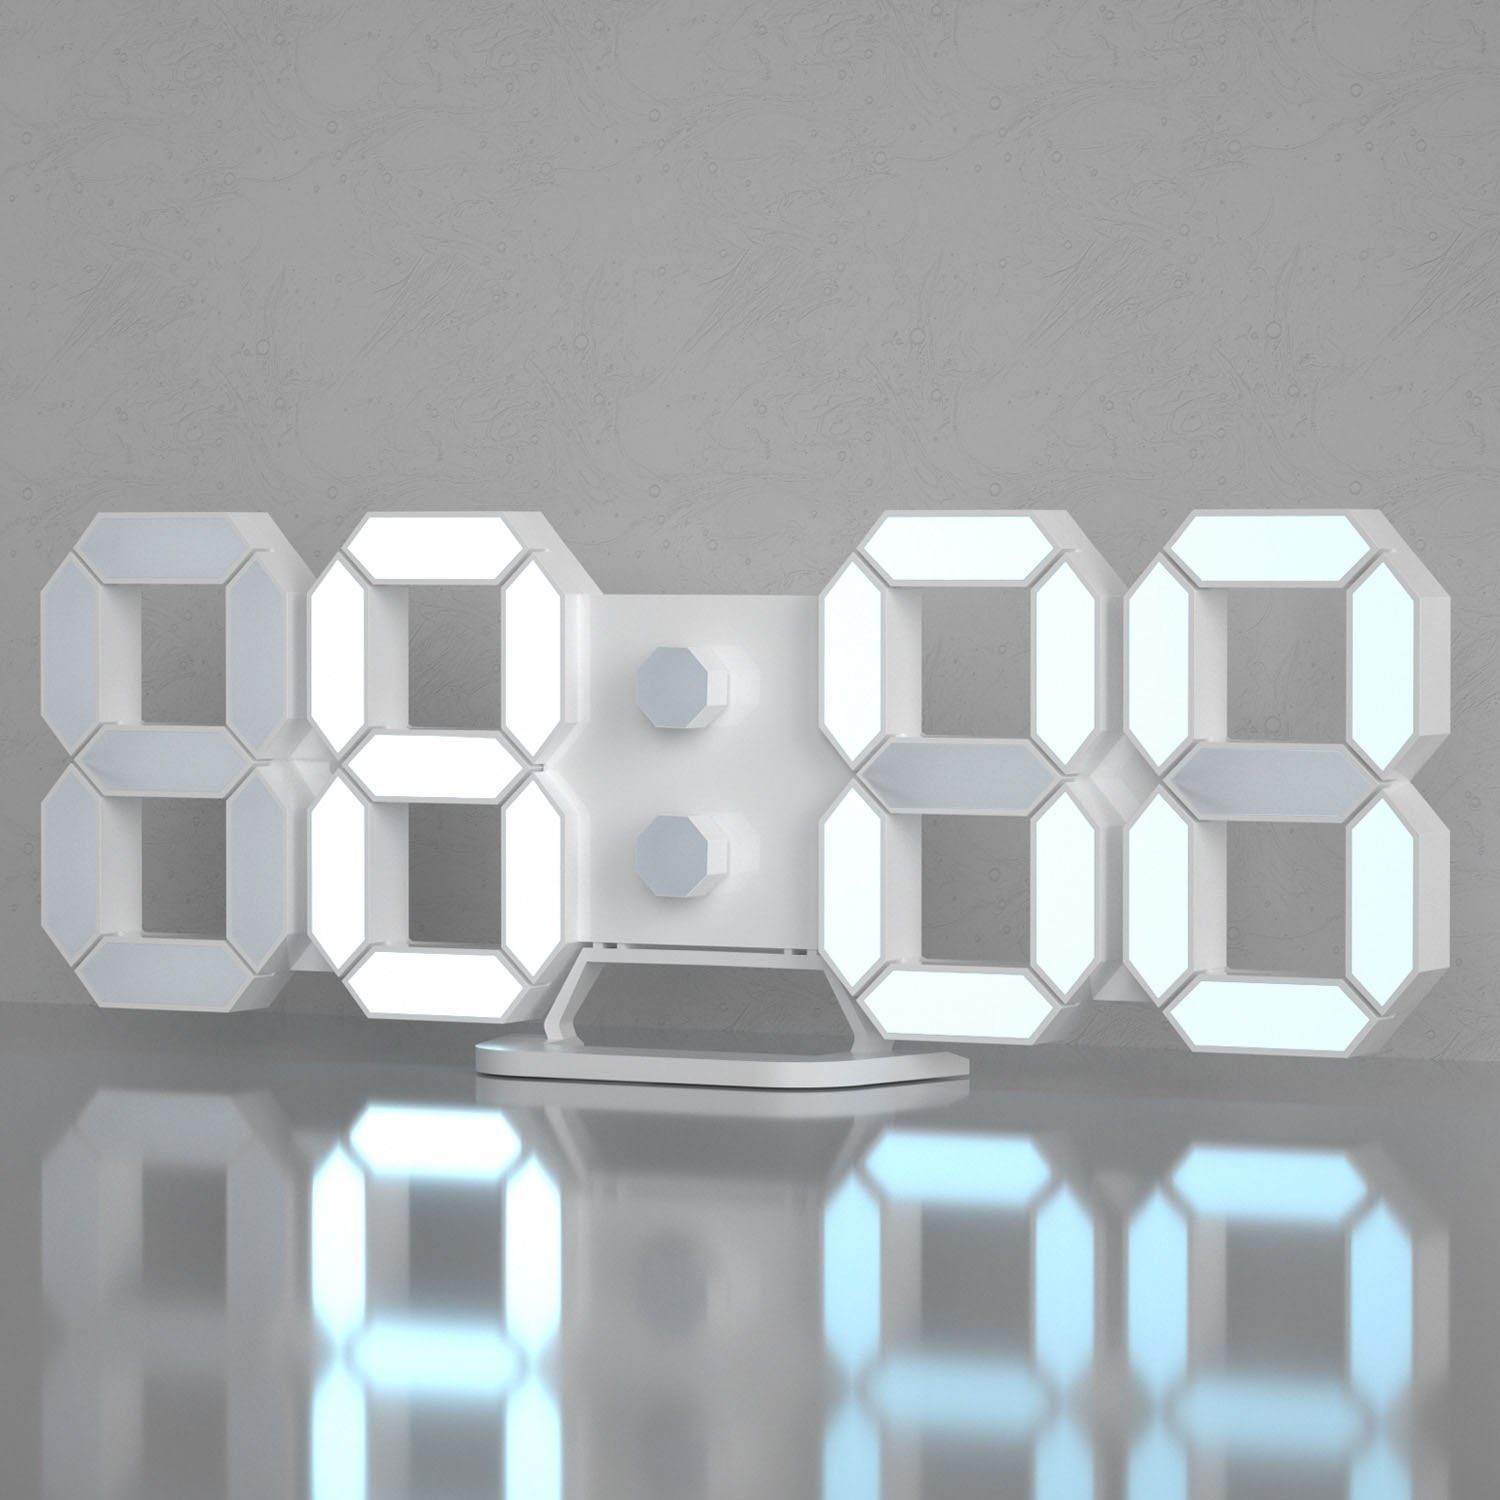 Digitale 3D LED Wanduhr Wecker Snooze 12/24 Stunden Anzeige